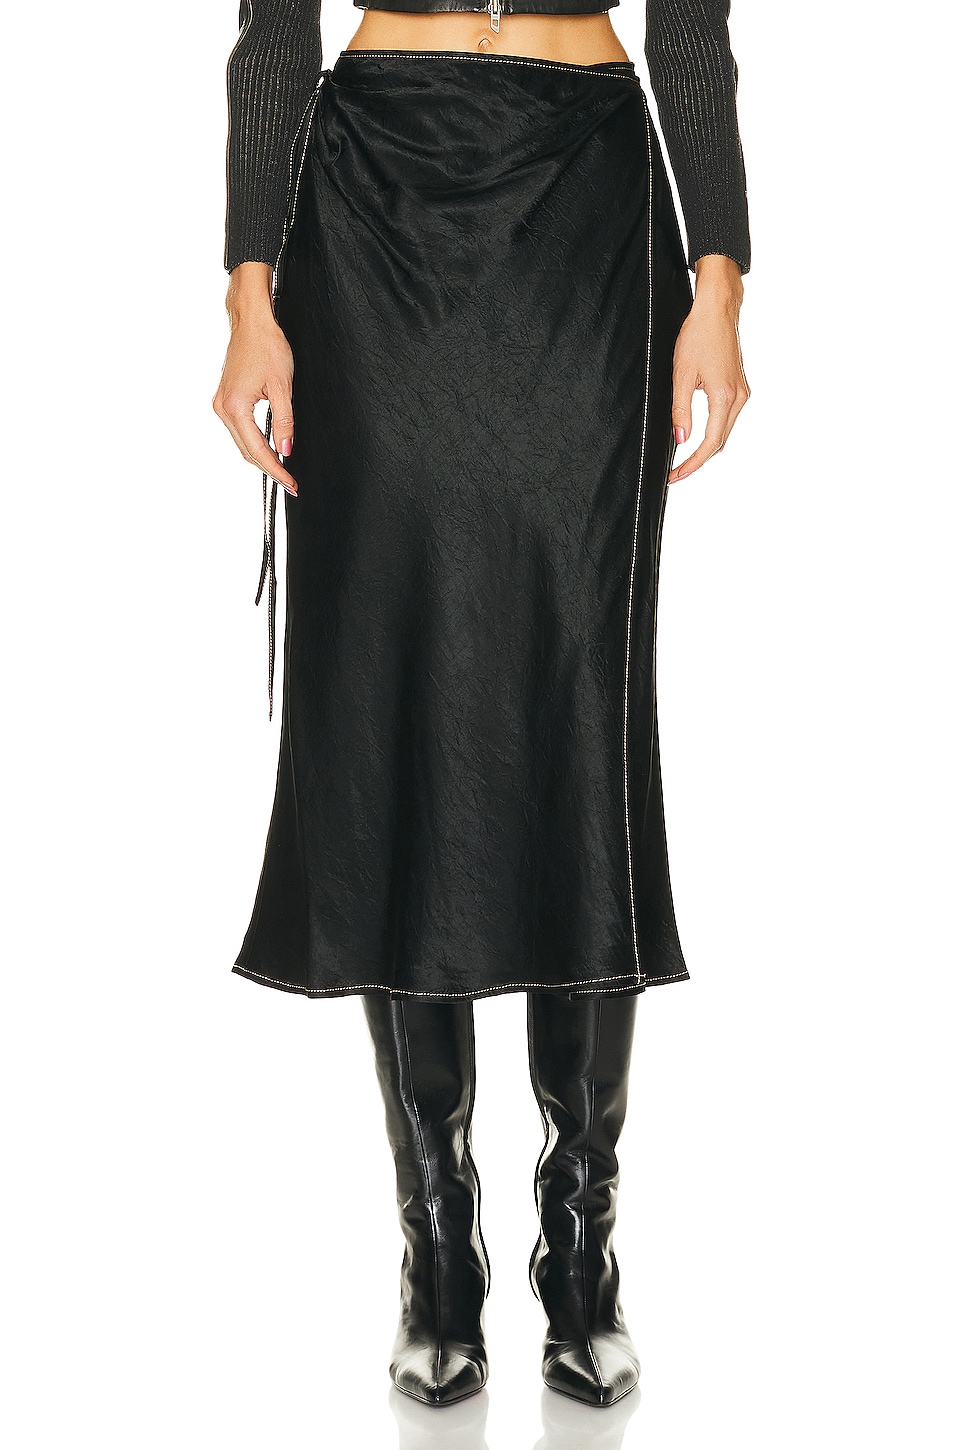 Image 1 of Acne Studios Bias Skirt in Black